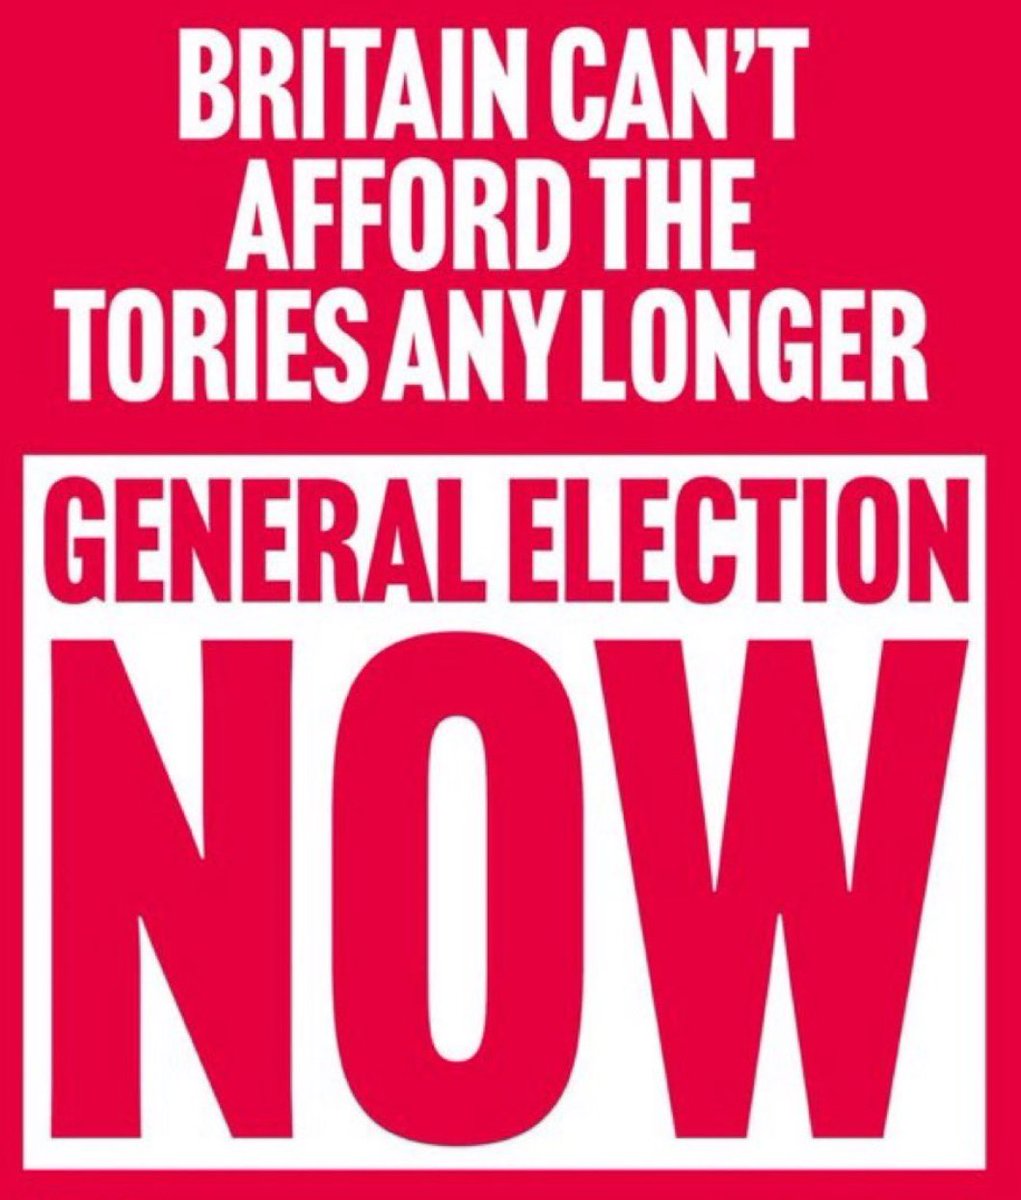 #ToriesOut350
#GeneralElectionNow 
#TorySleazeandCorruption
#TorySewageParty